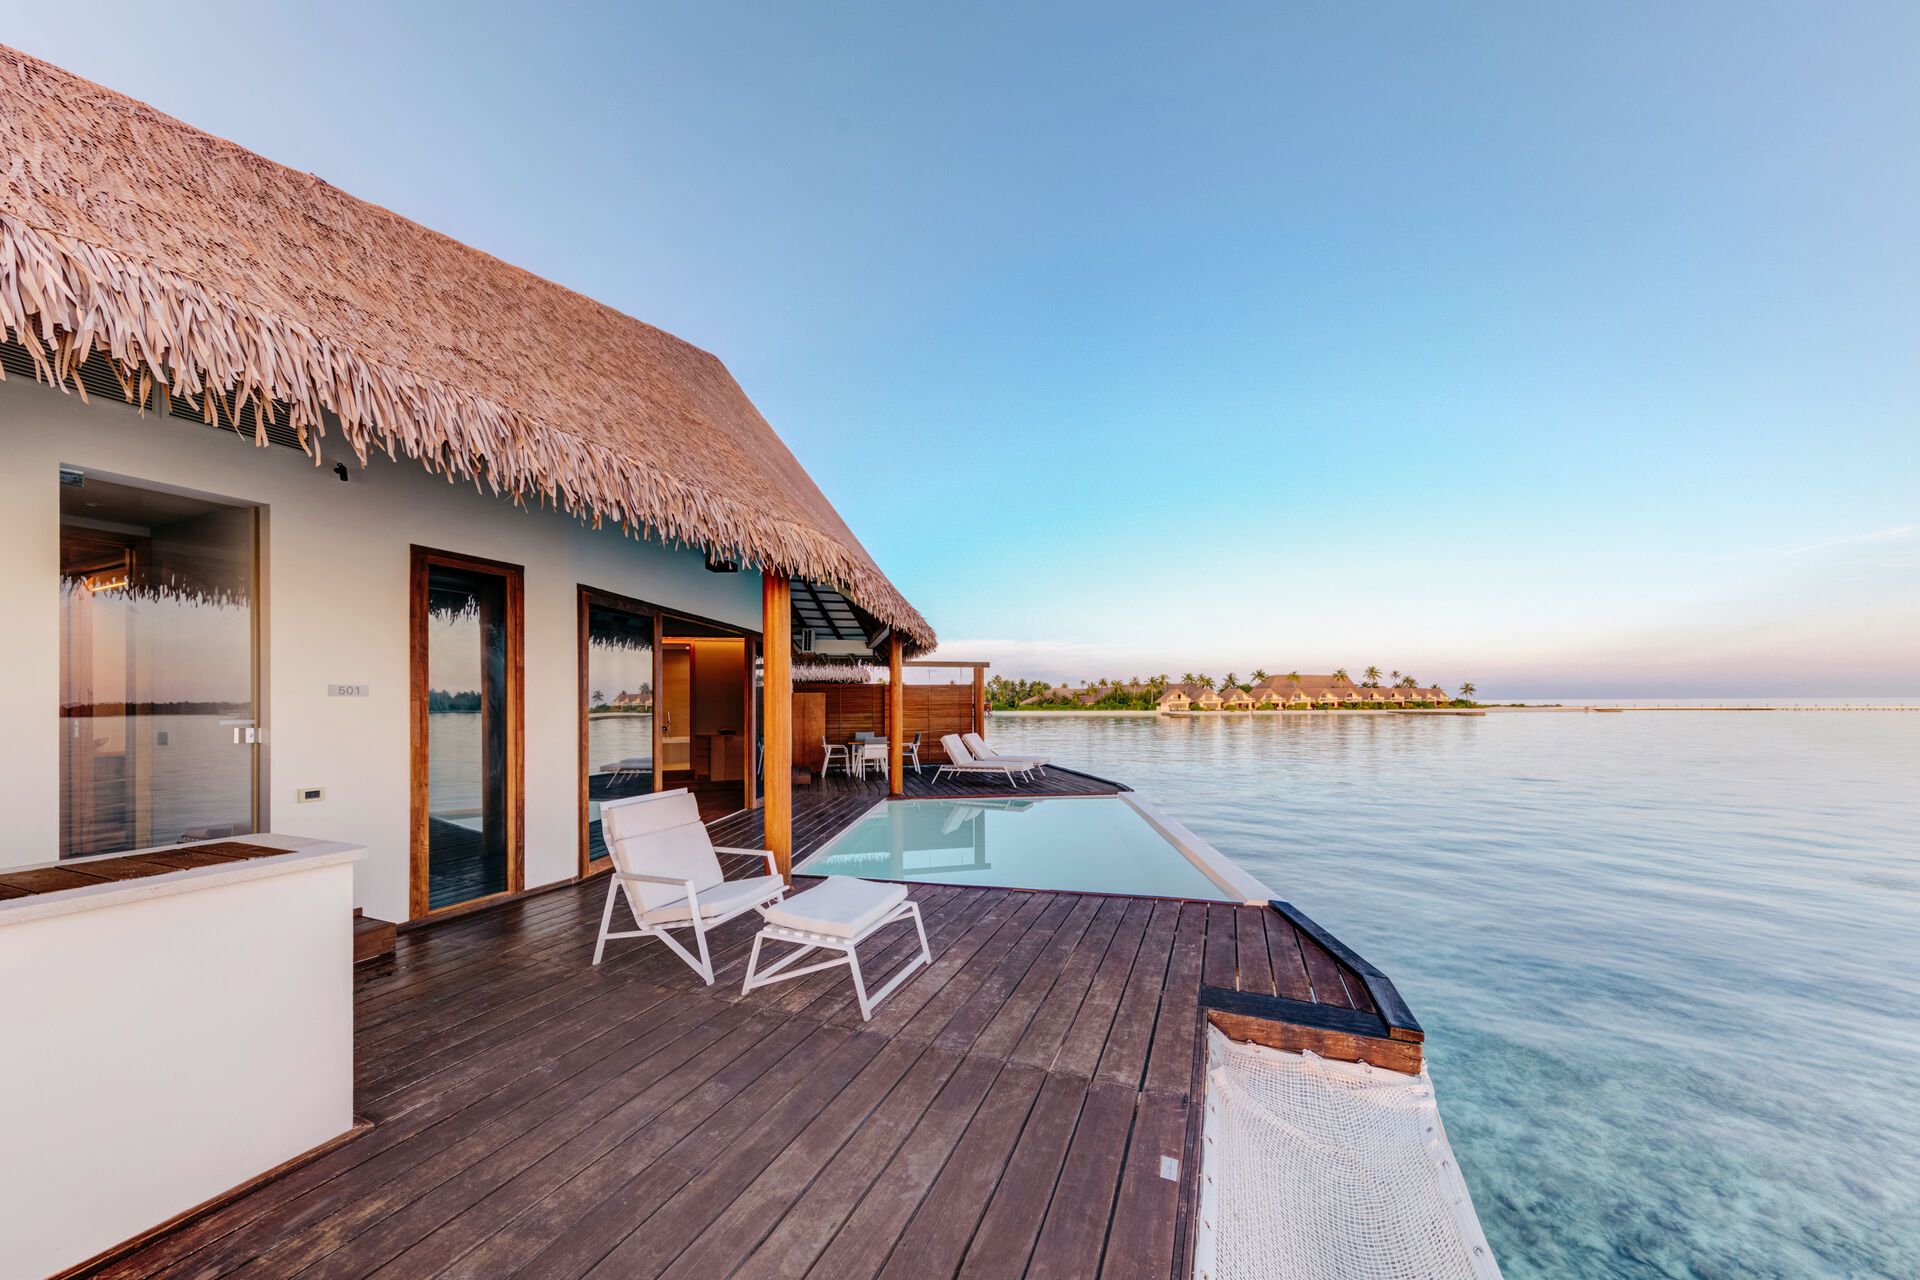 Maldives - Hotel Cinnamon Velifushi Maldives 5*